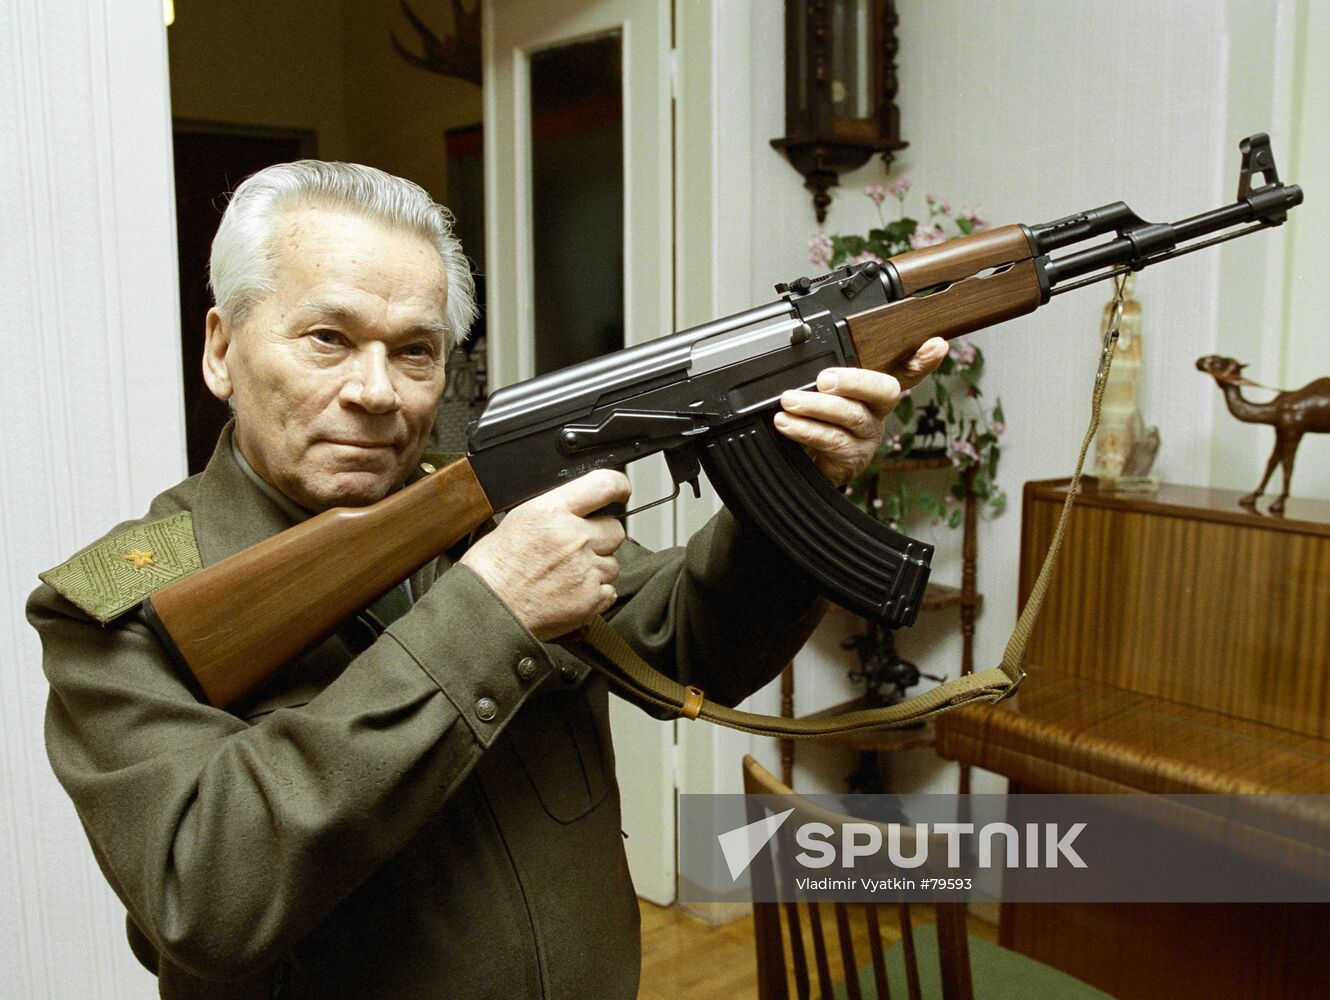 Original AK-47 Kalashnikov shooting